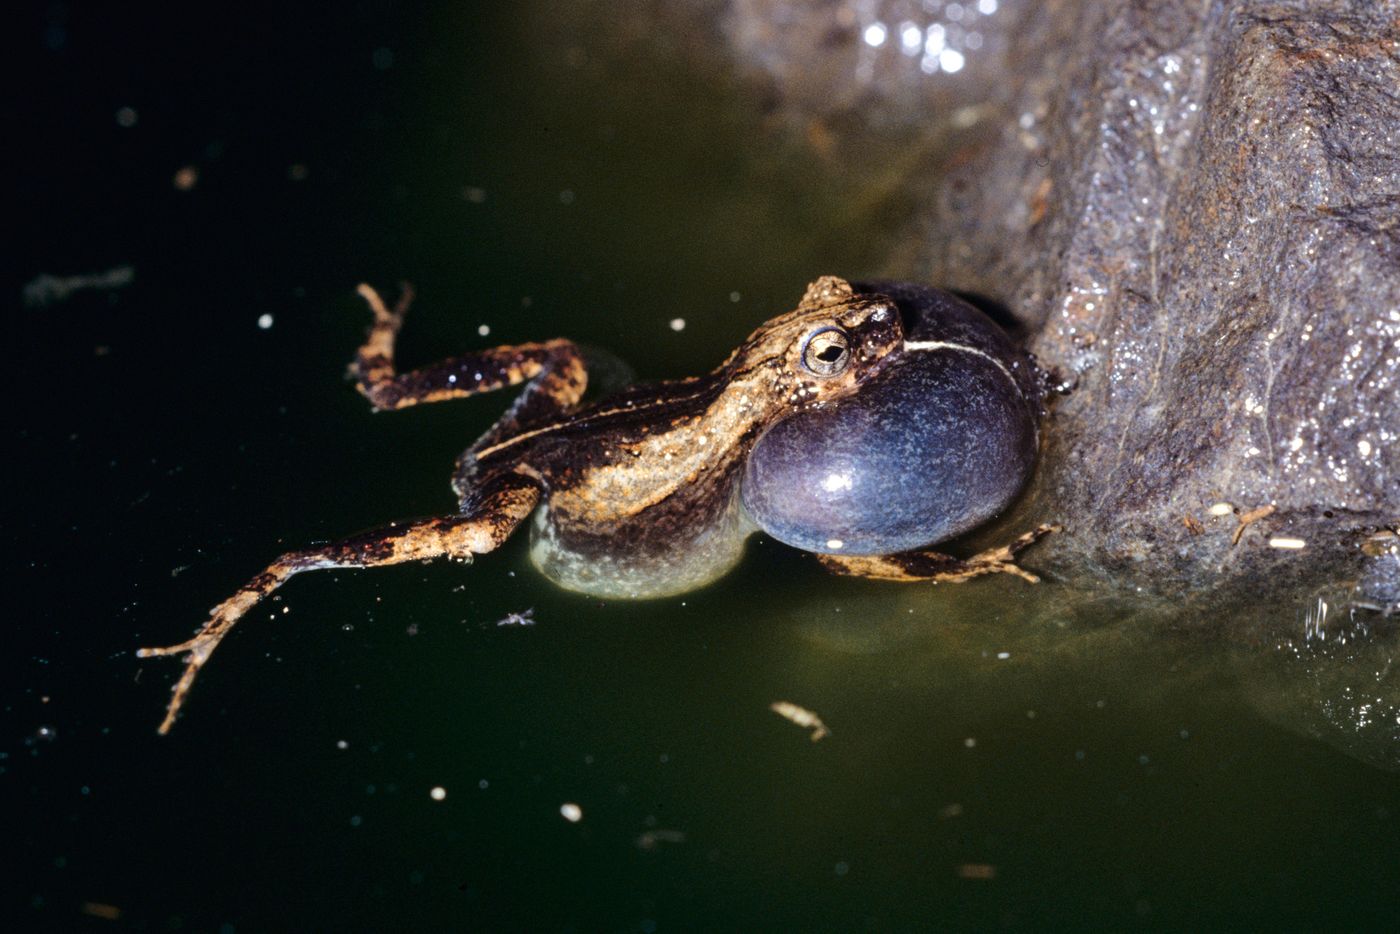 A tungara frog making its famous 'tun gara gara' mating call.